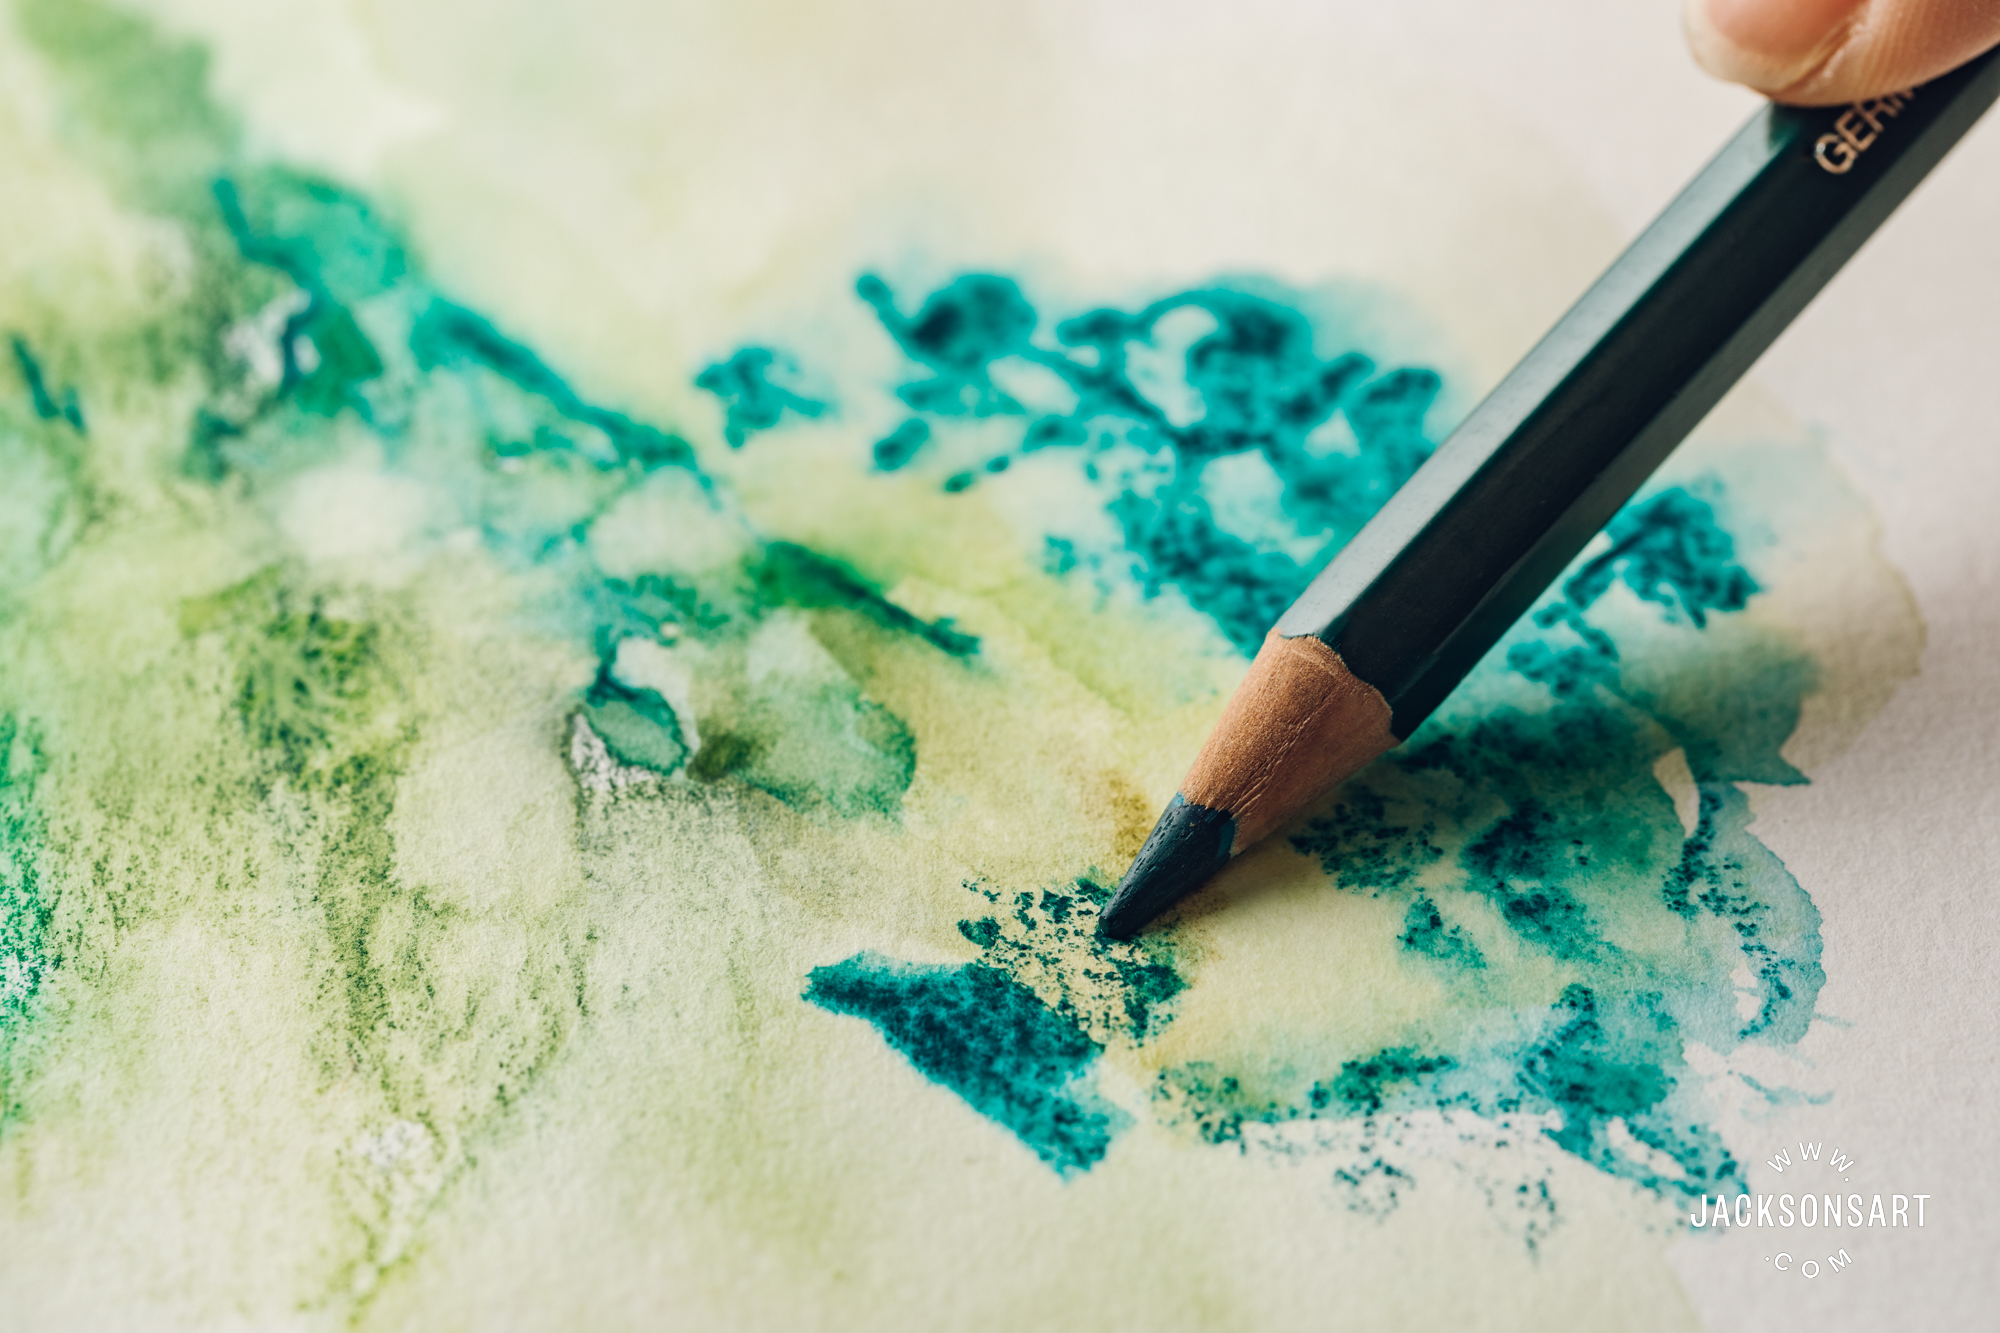 How To Use Watercolour Pencils - Jackson's Art Blog